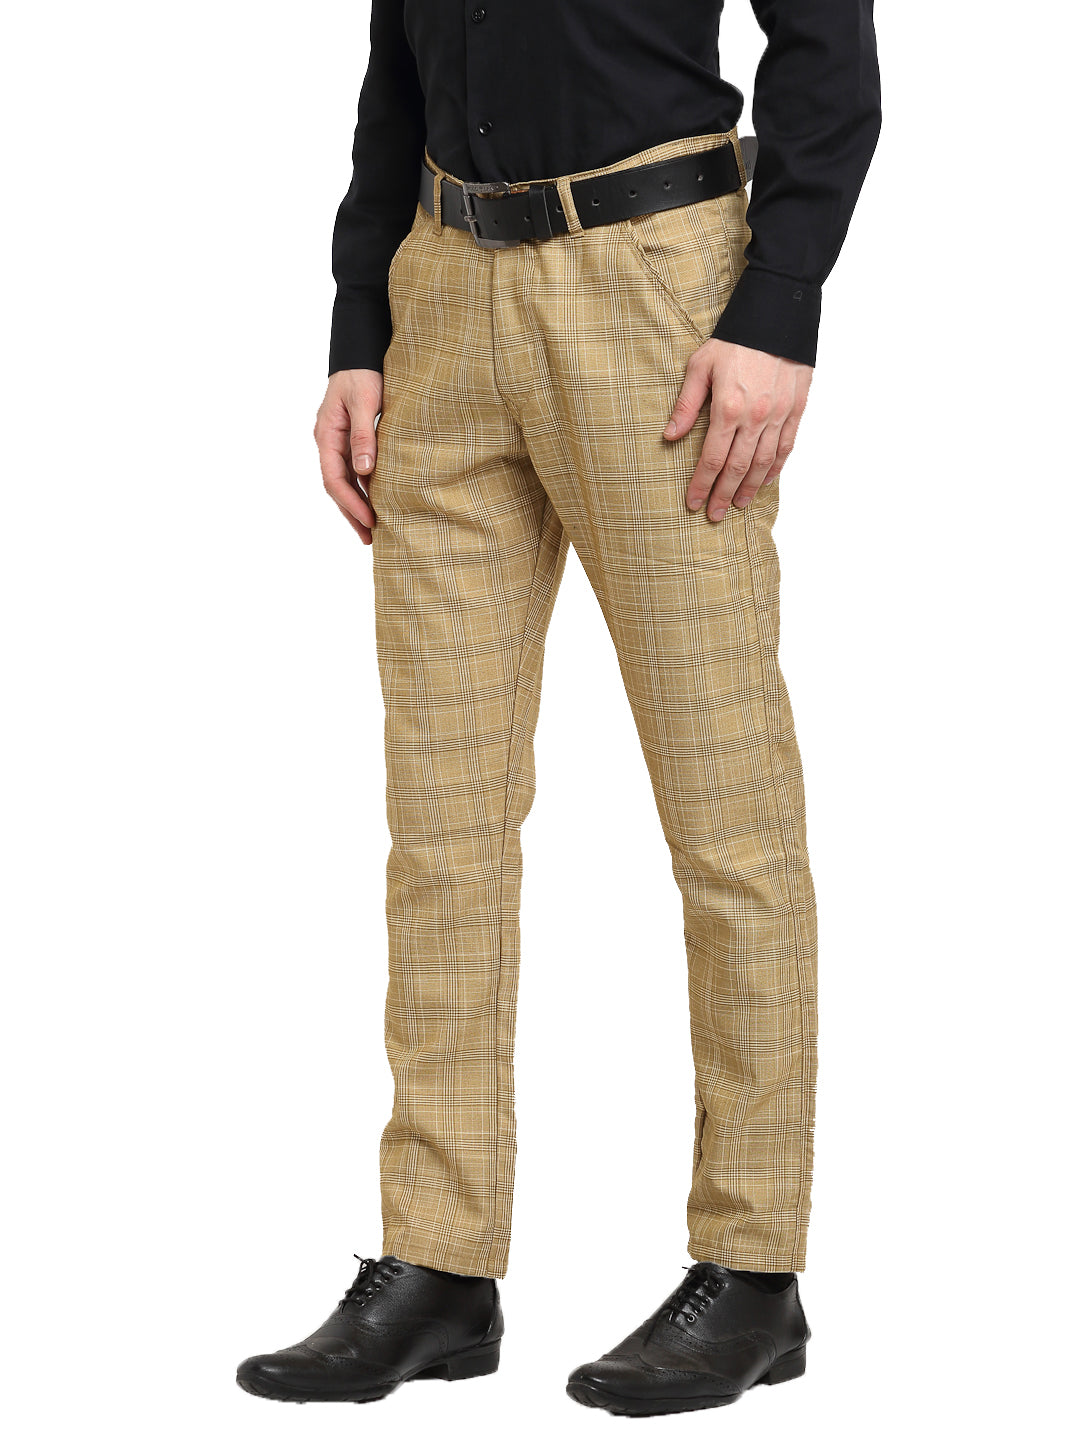 Men's Checked Trousers on Sale | Zalando UK